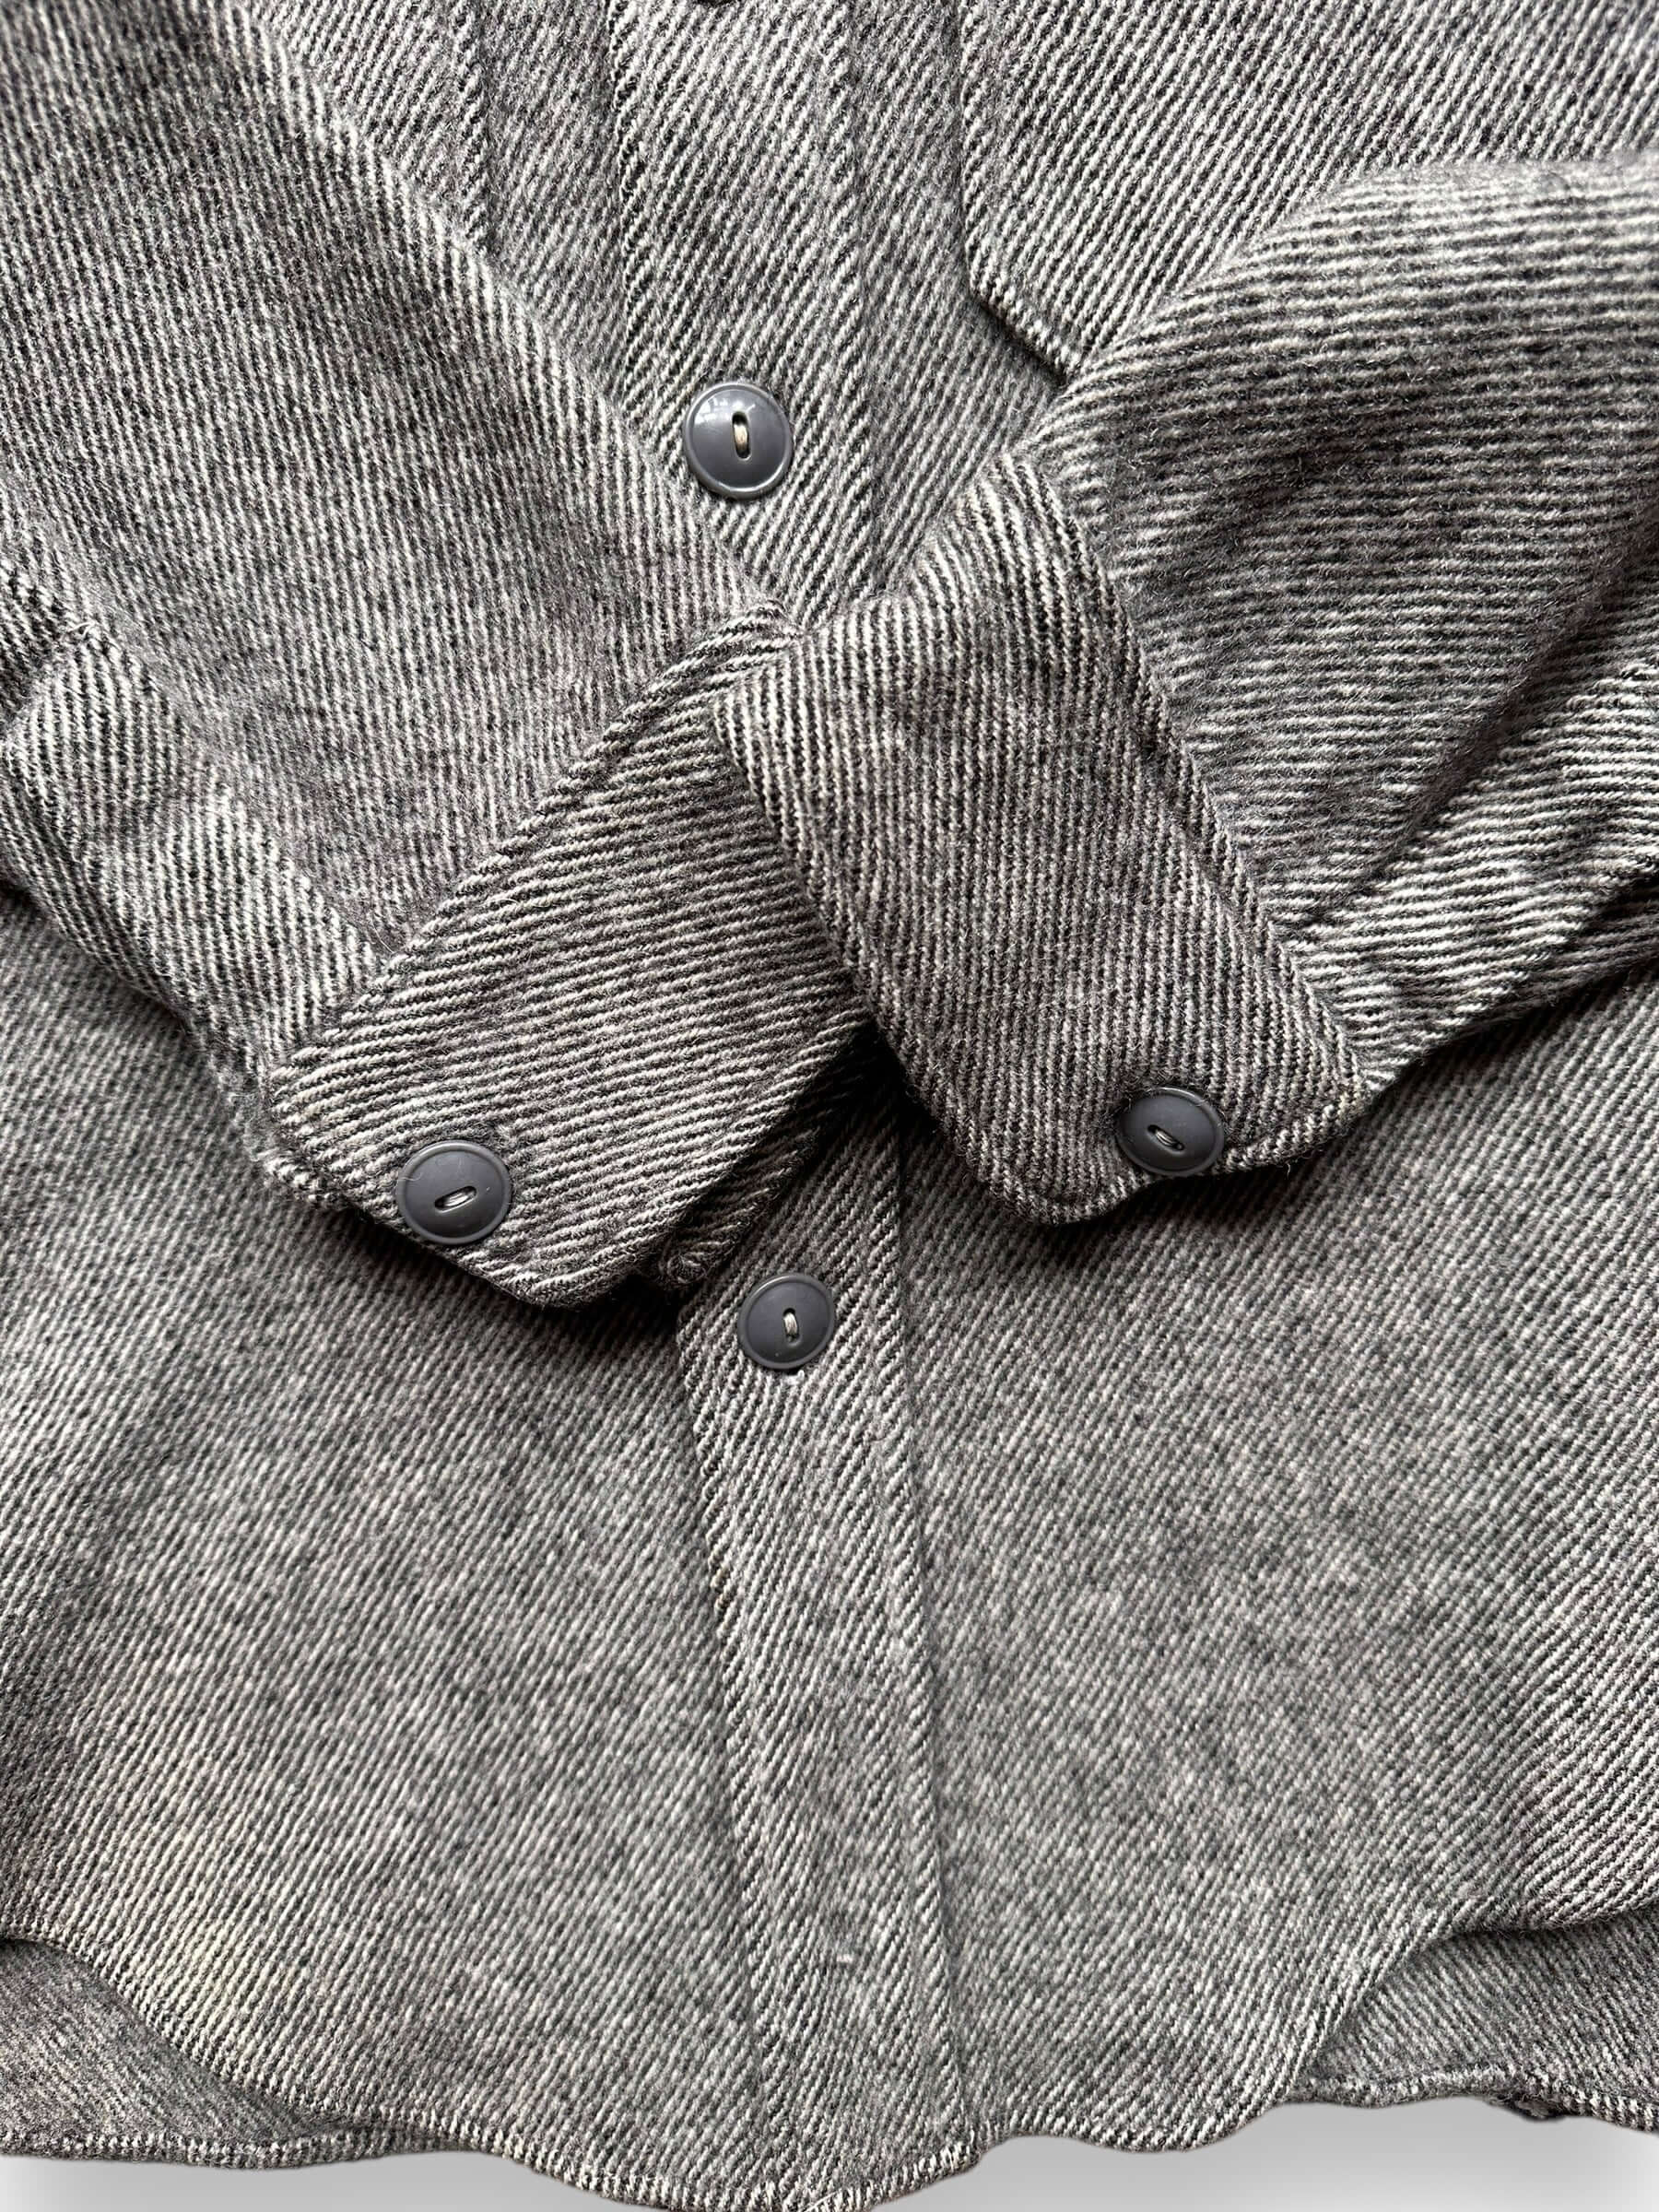 Cuff View of Vintage Woolrich Shirt Jacket SZ M | Vintage Workwear Seattle